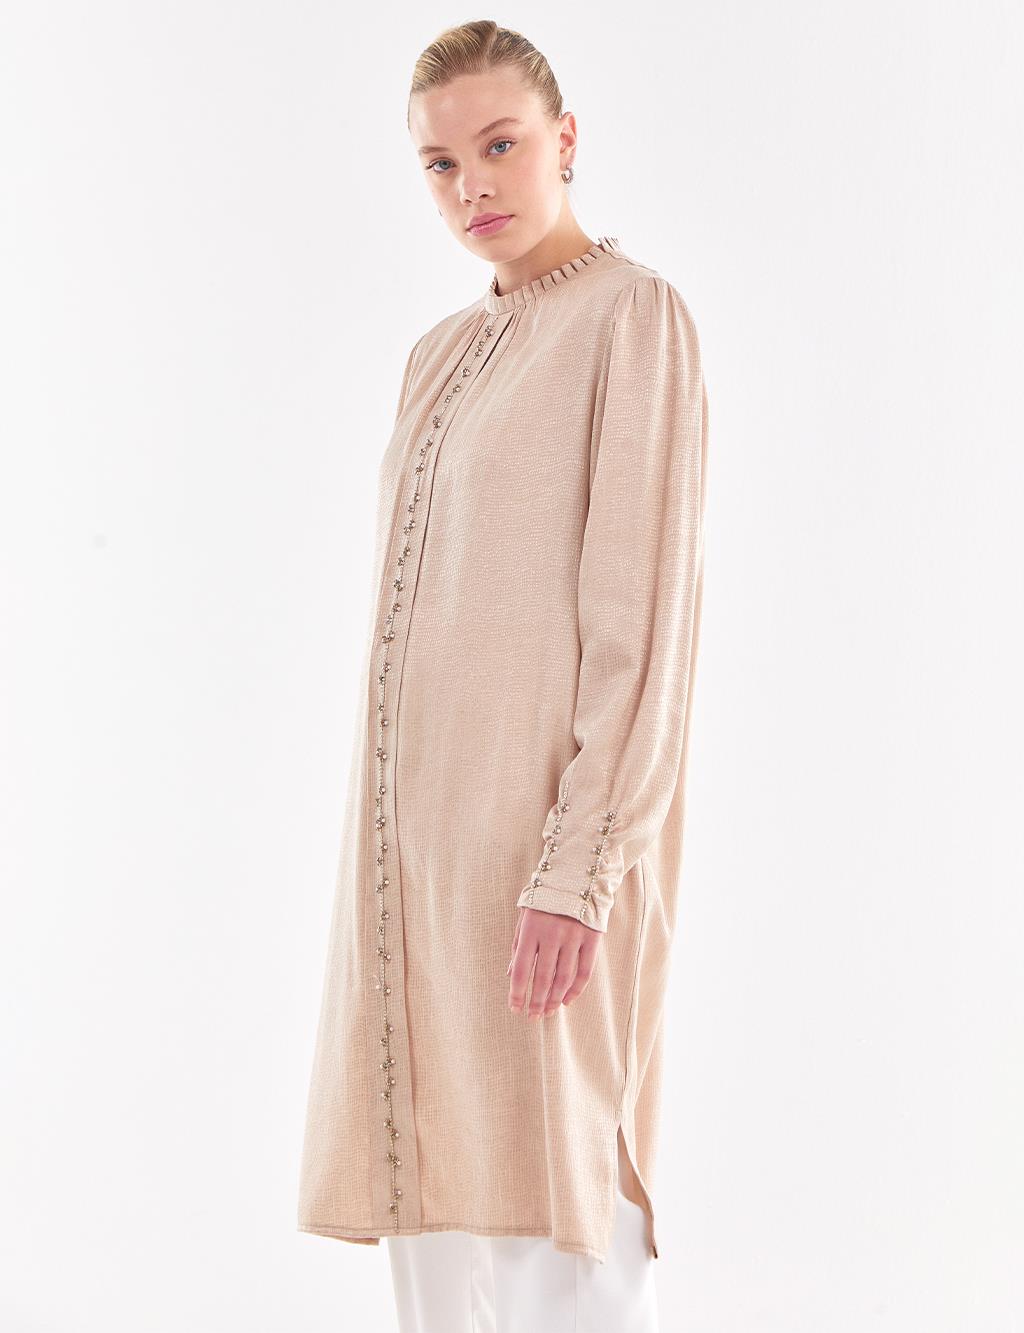 Туника с вышитым воротником и рюшами песочно-бежевого цвета Kayra рубашка jp1880 цвет sand beige